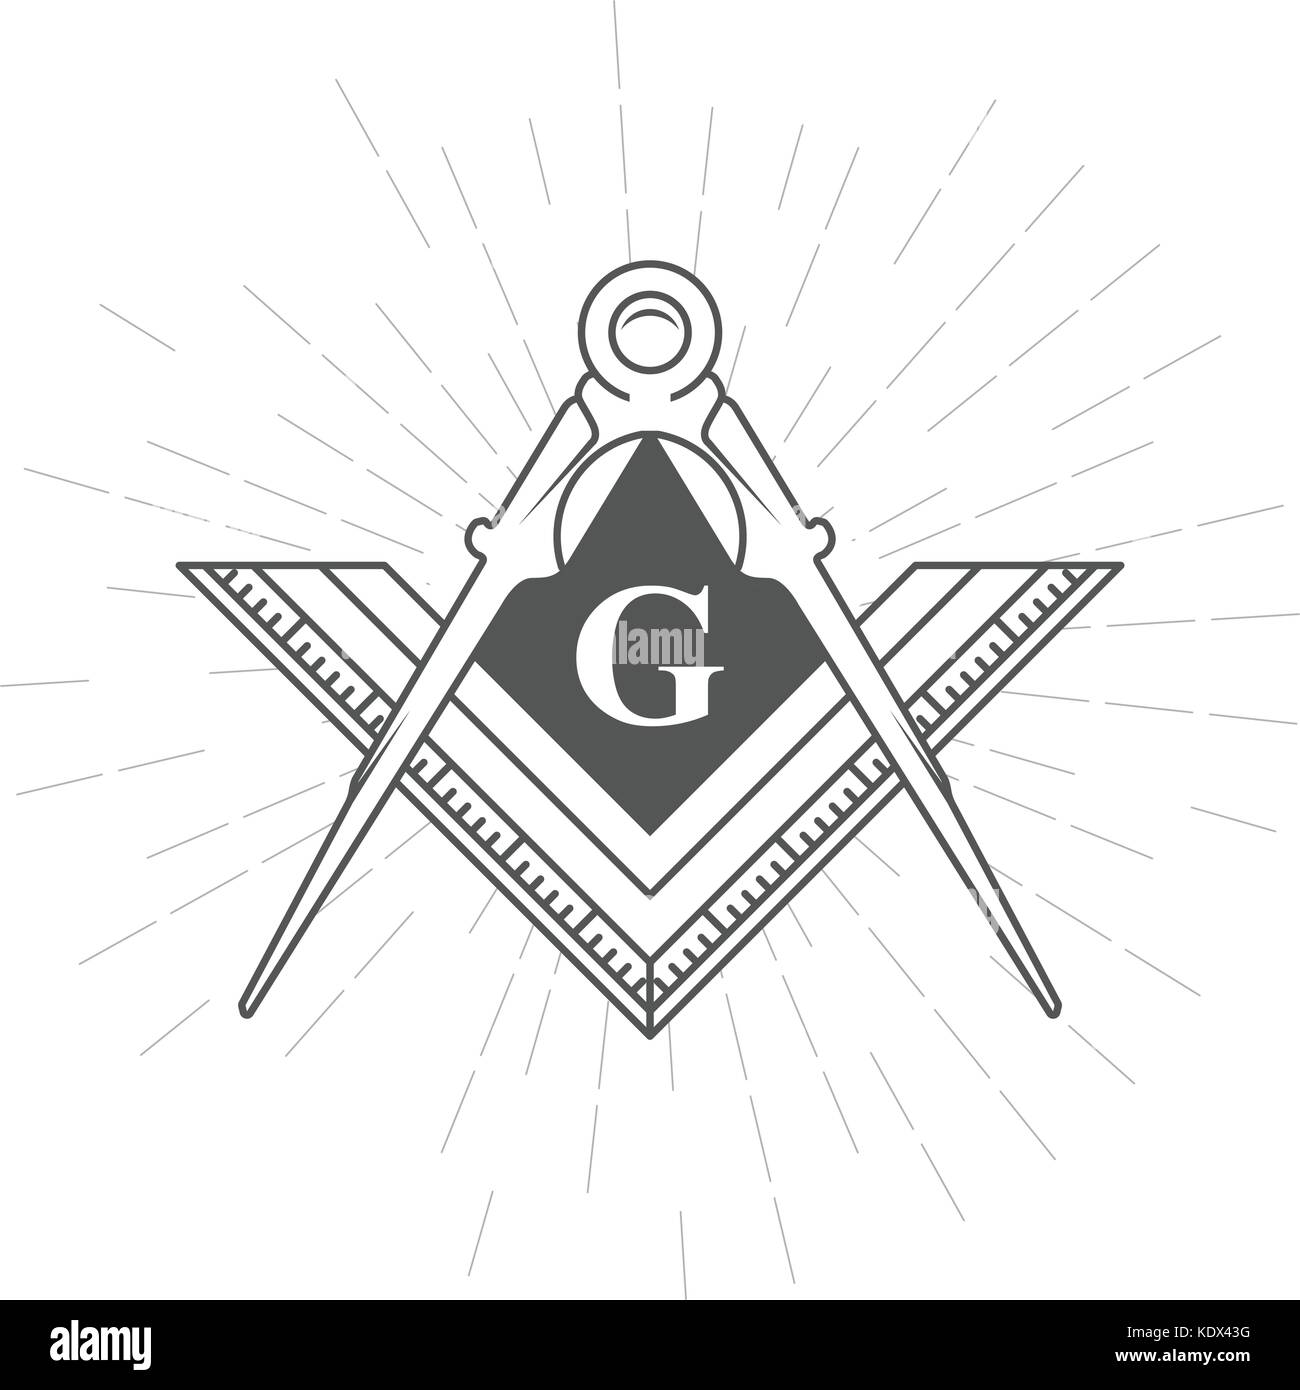 Freemason symbol - illuminati logo with compasses and ruler Stock Vector